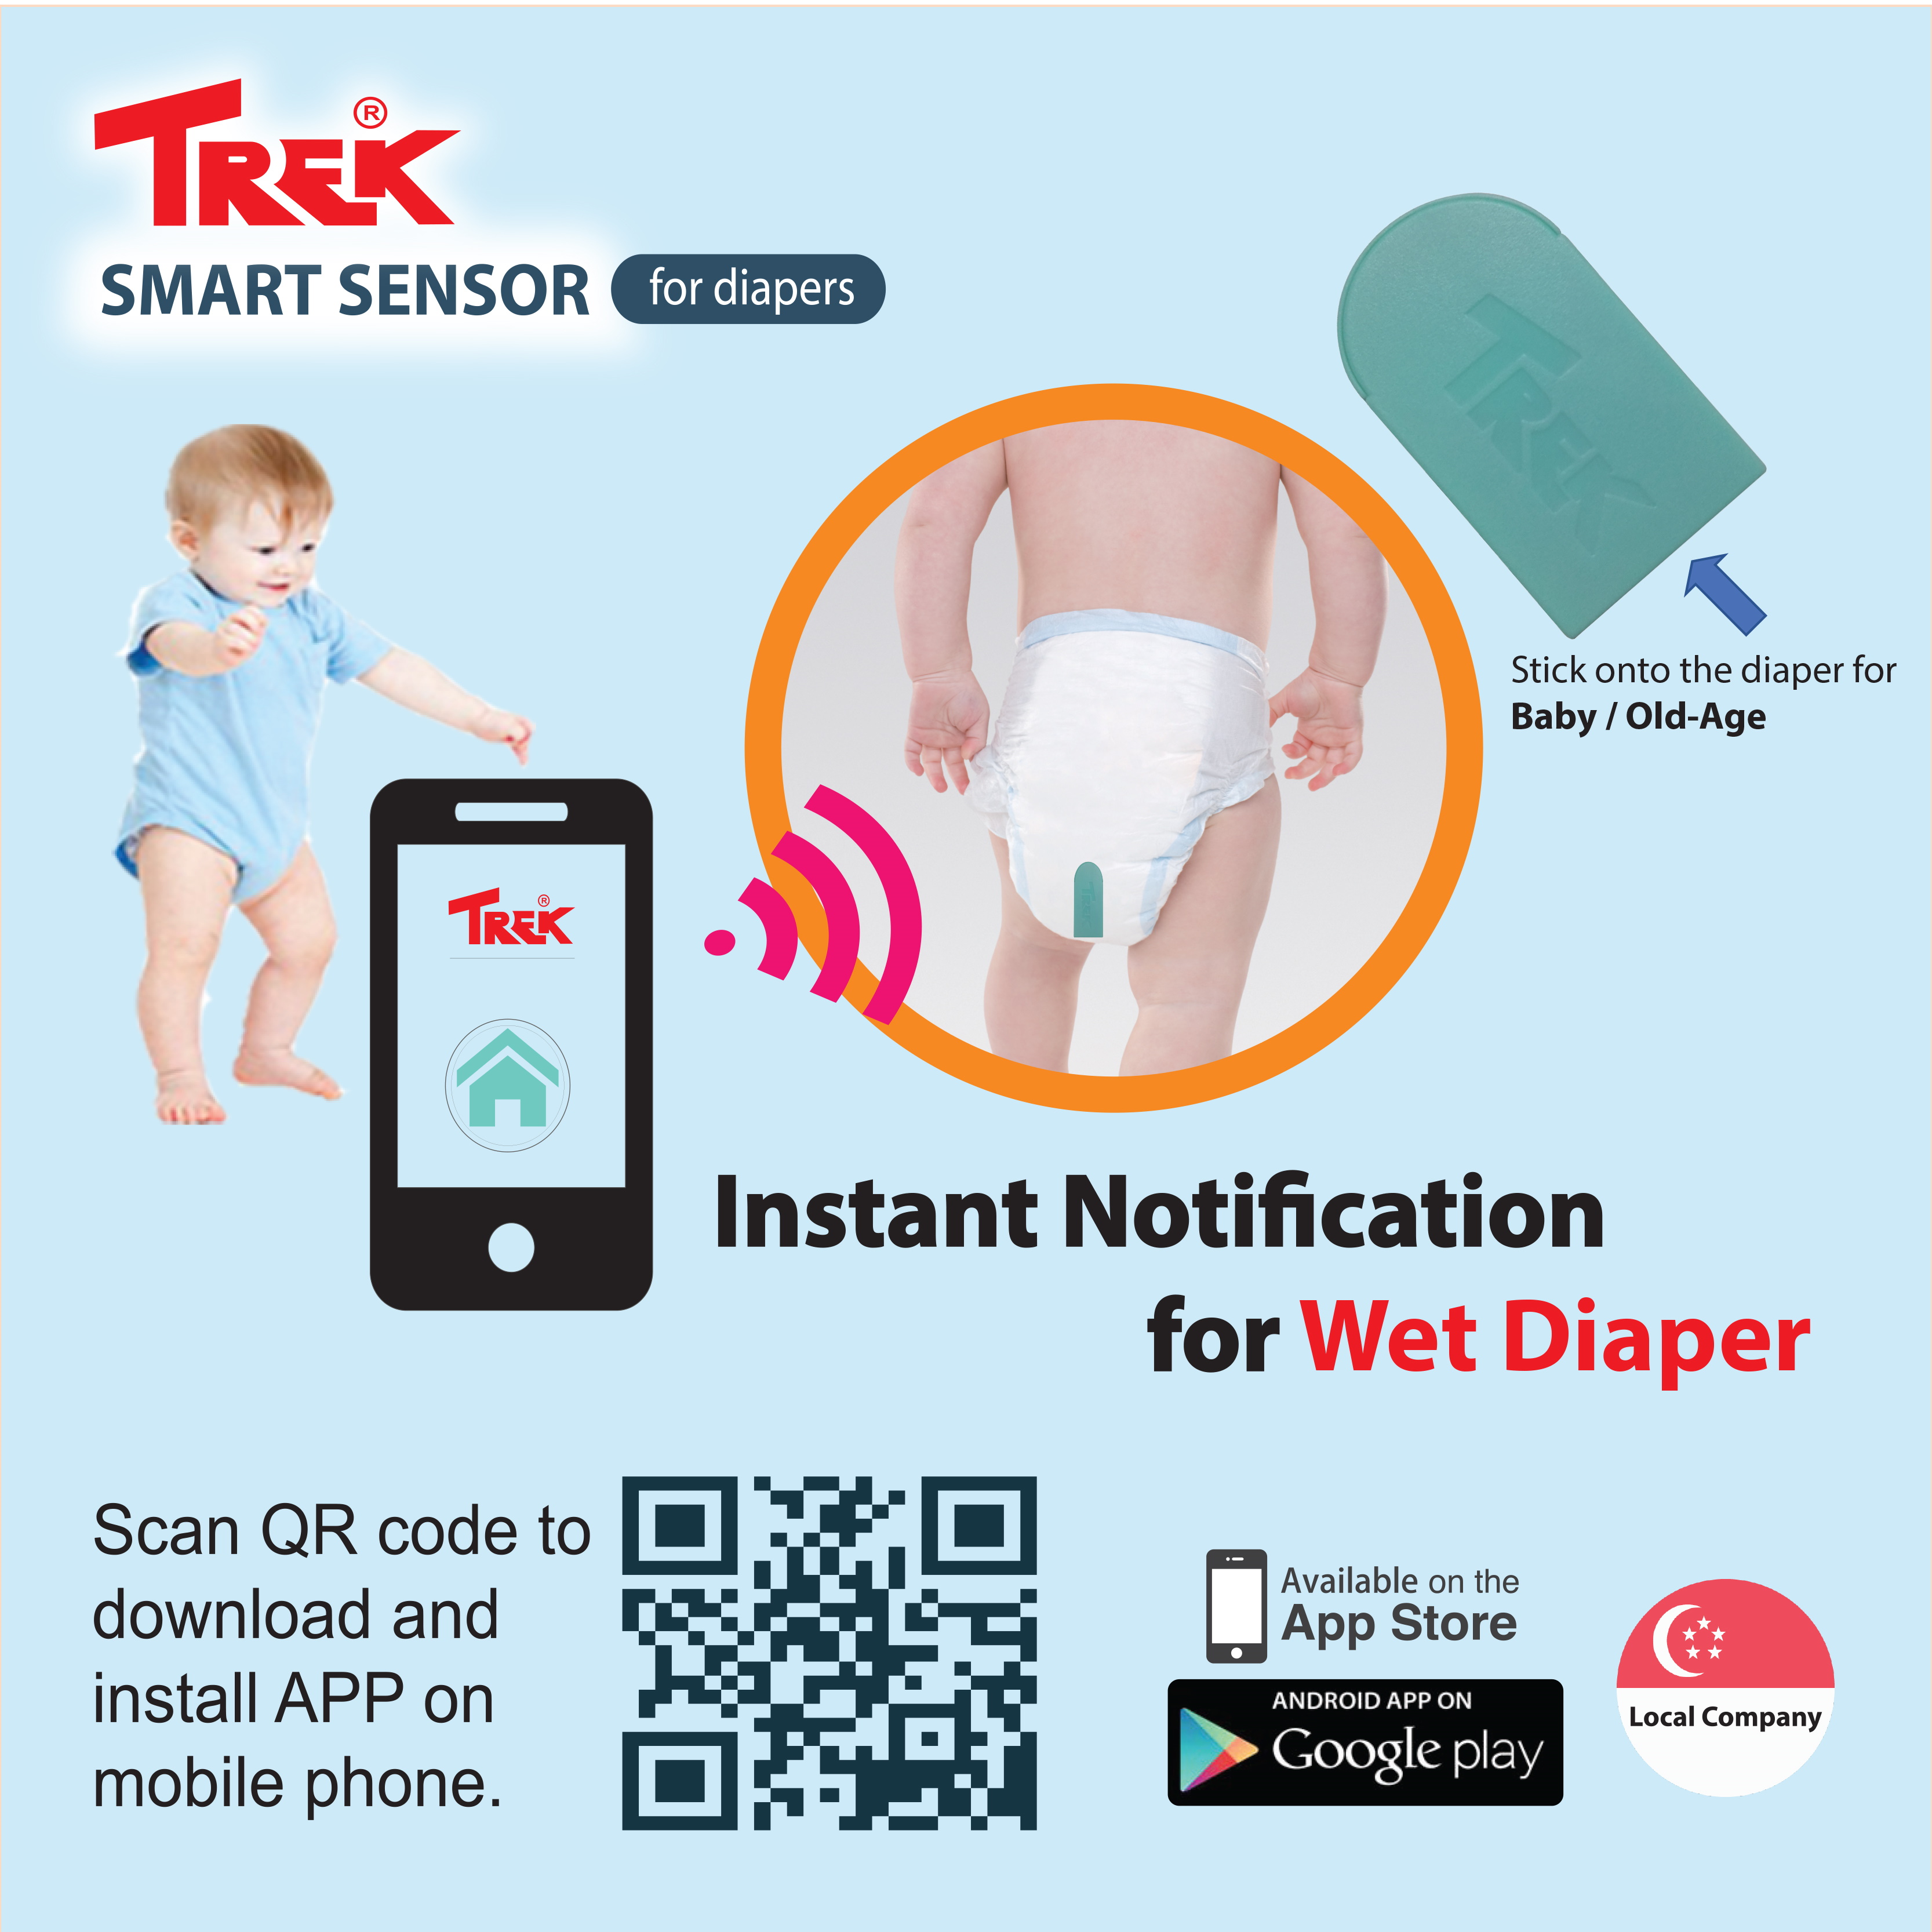 Trek Smart Sensor (instant notification for wet diaper)